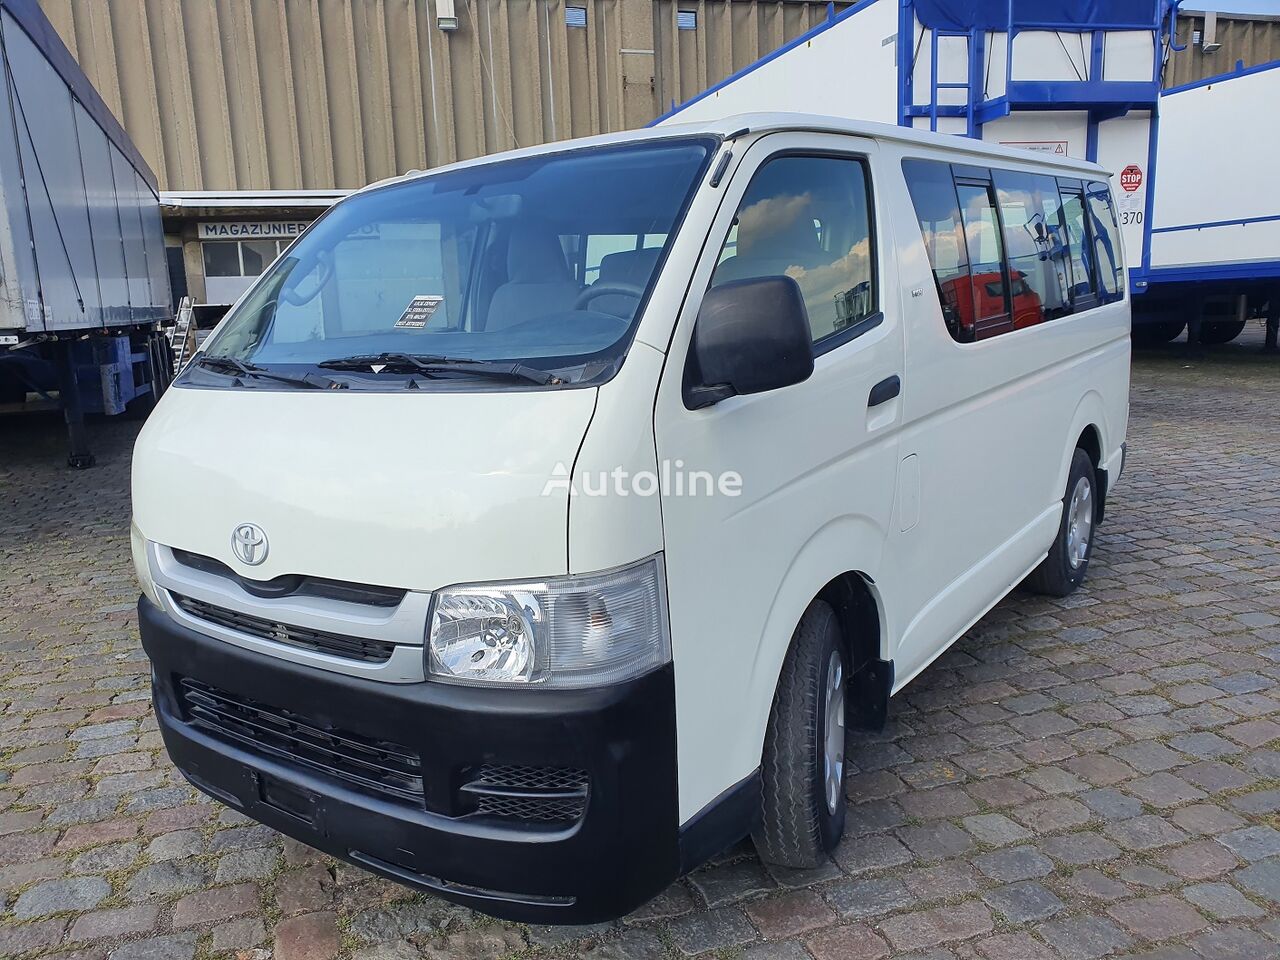 Купить пассажирский микроавтобус Toyota Hiace.15 places - Diesel.  (Transport service - - Worldwide Бельгия Bruxelles, PJ27026